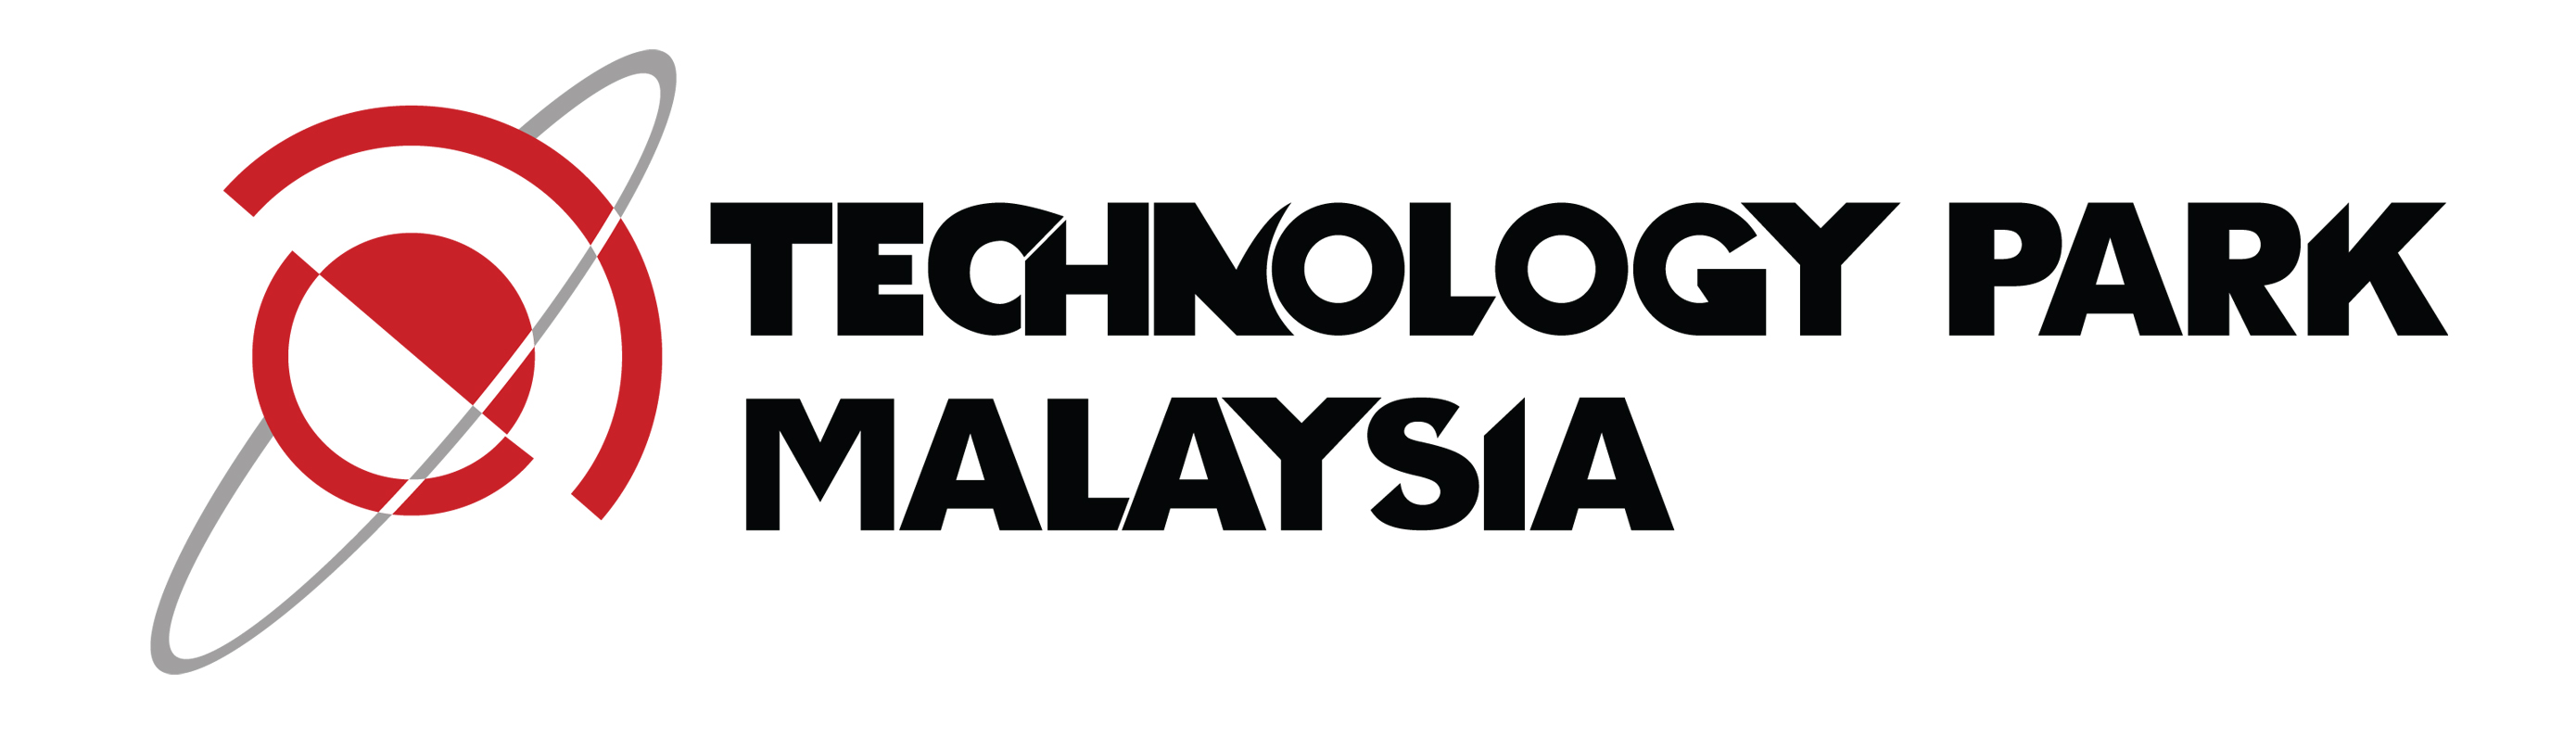 Technology Park Malaysia Logo photo - 1